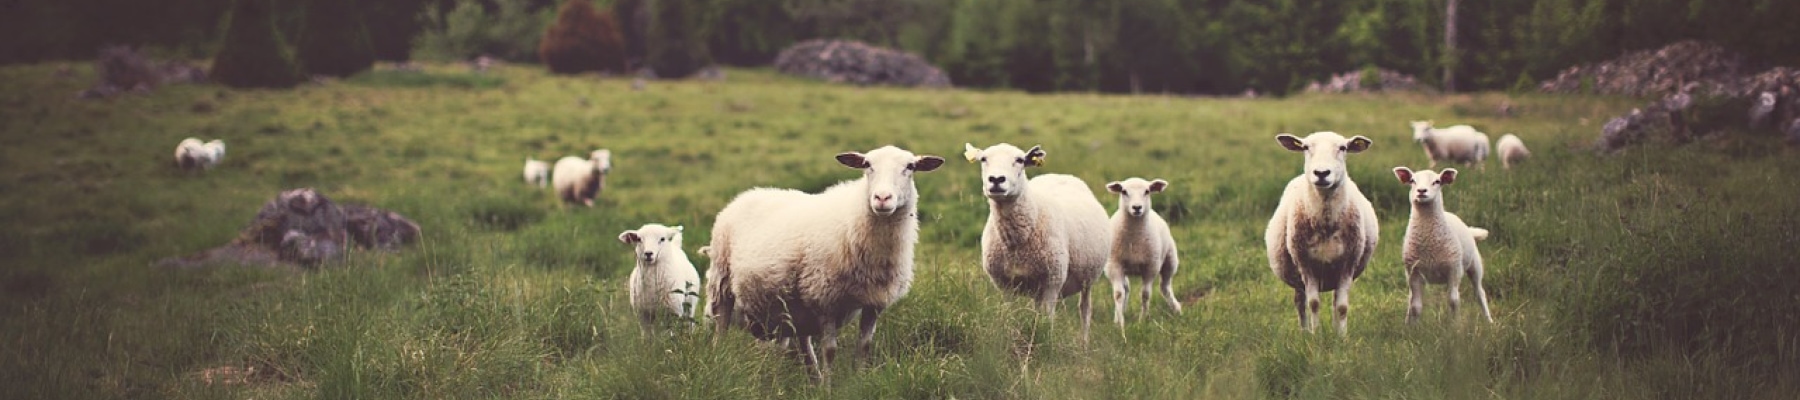 multiple_sheep.jpg